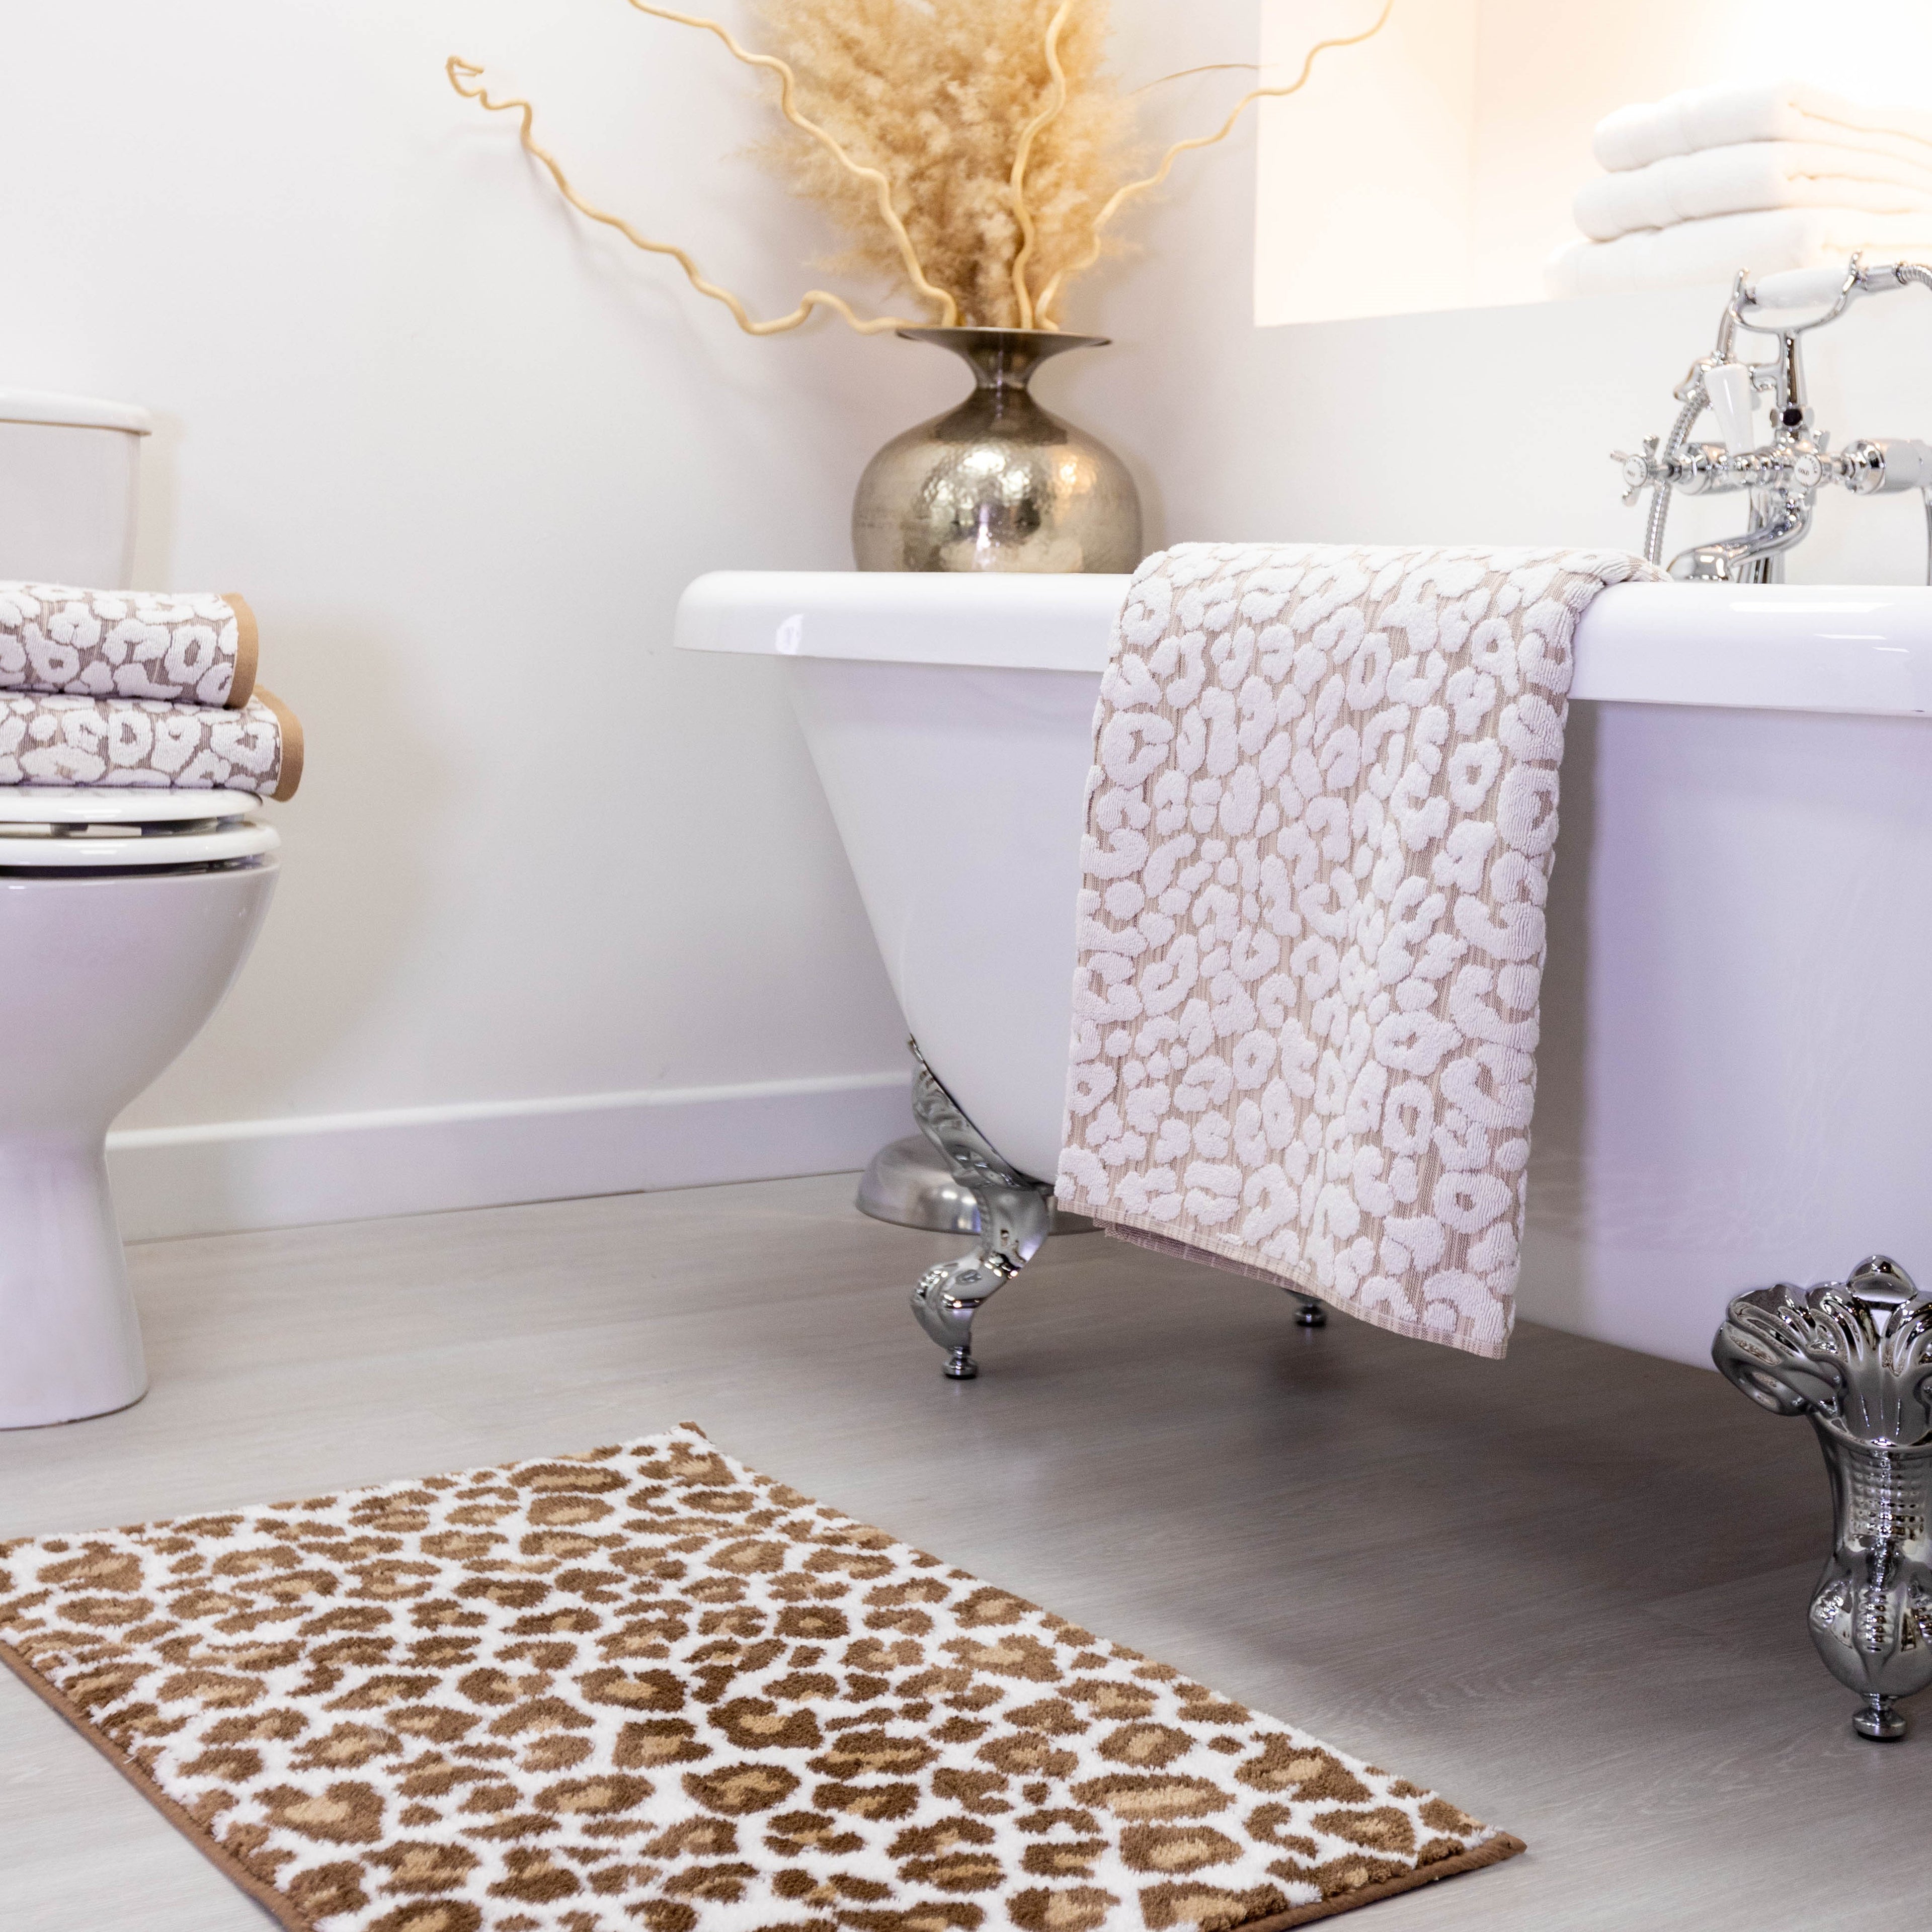 Neutral Bathroom decor - Leopard print co-ordinated towel and bath mats